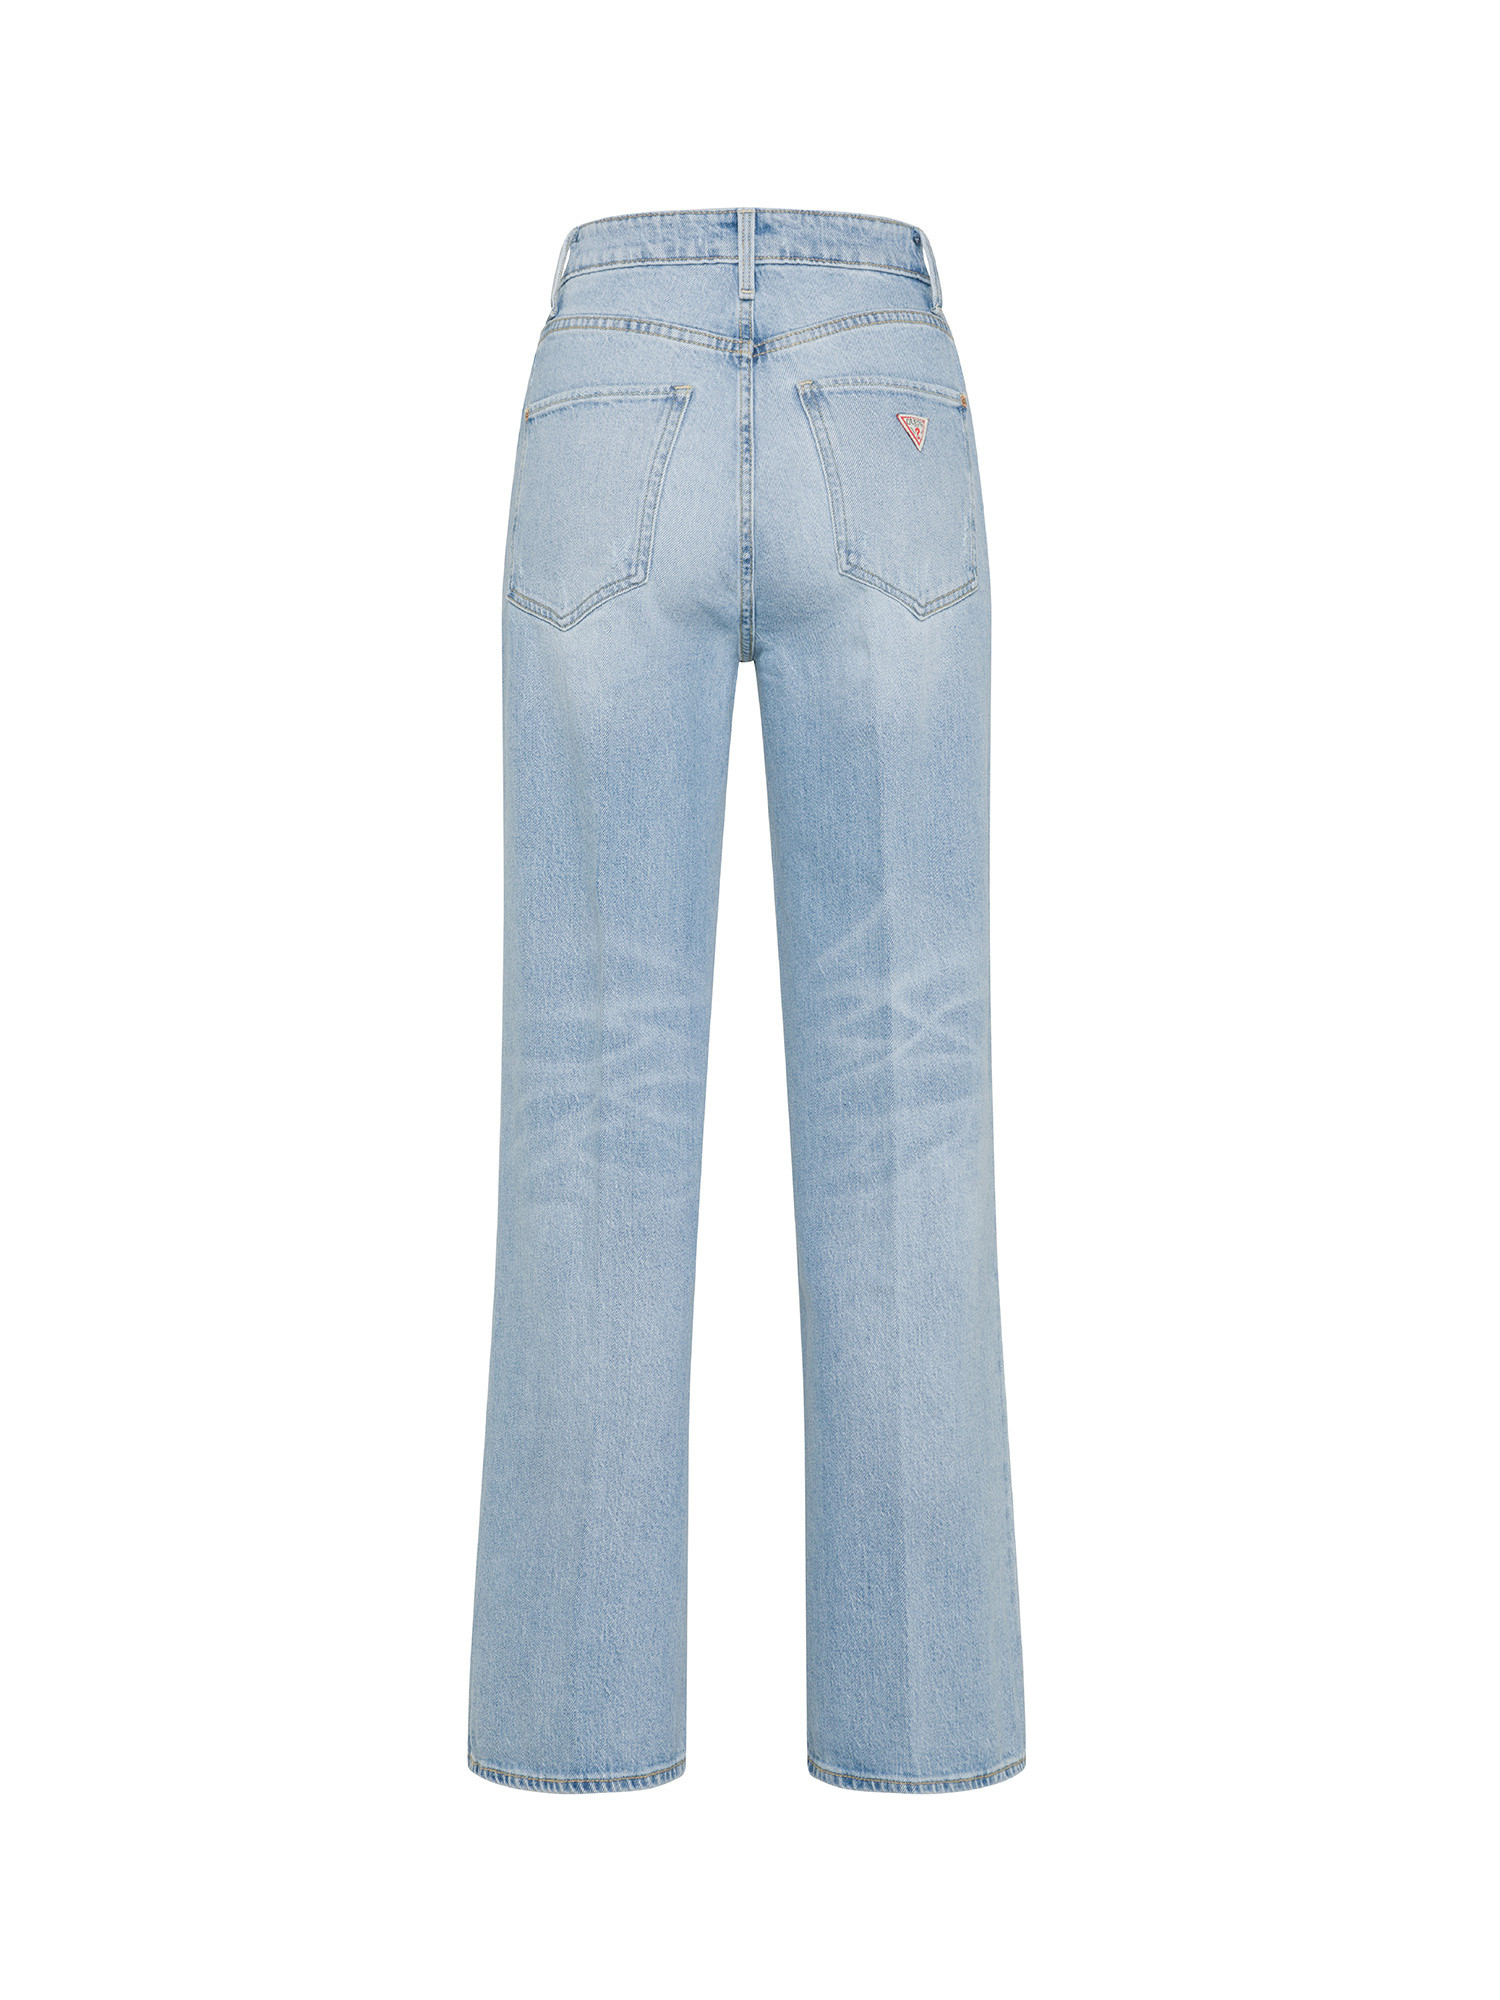 Pantalone 5 tasche, Blu, large image number 1